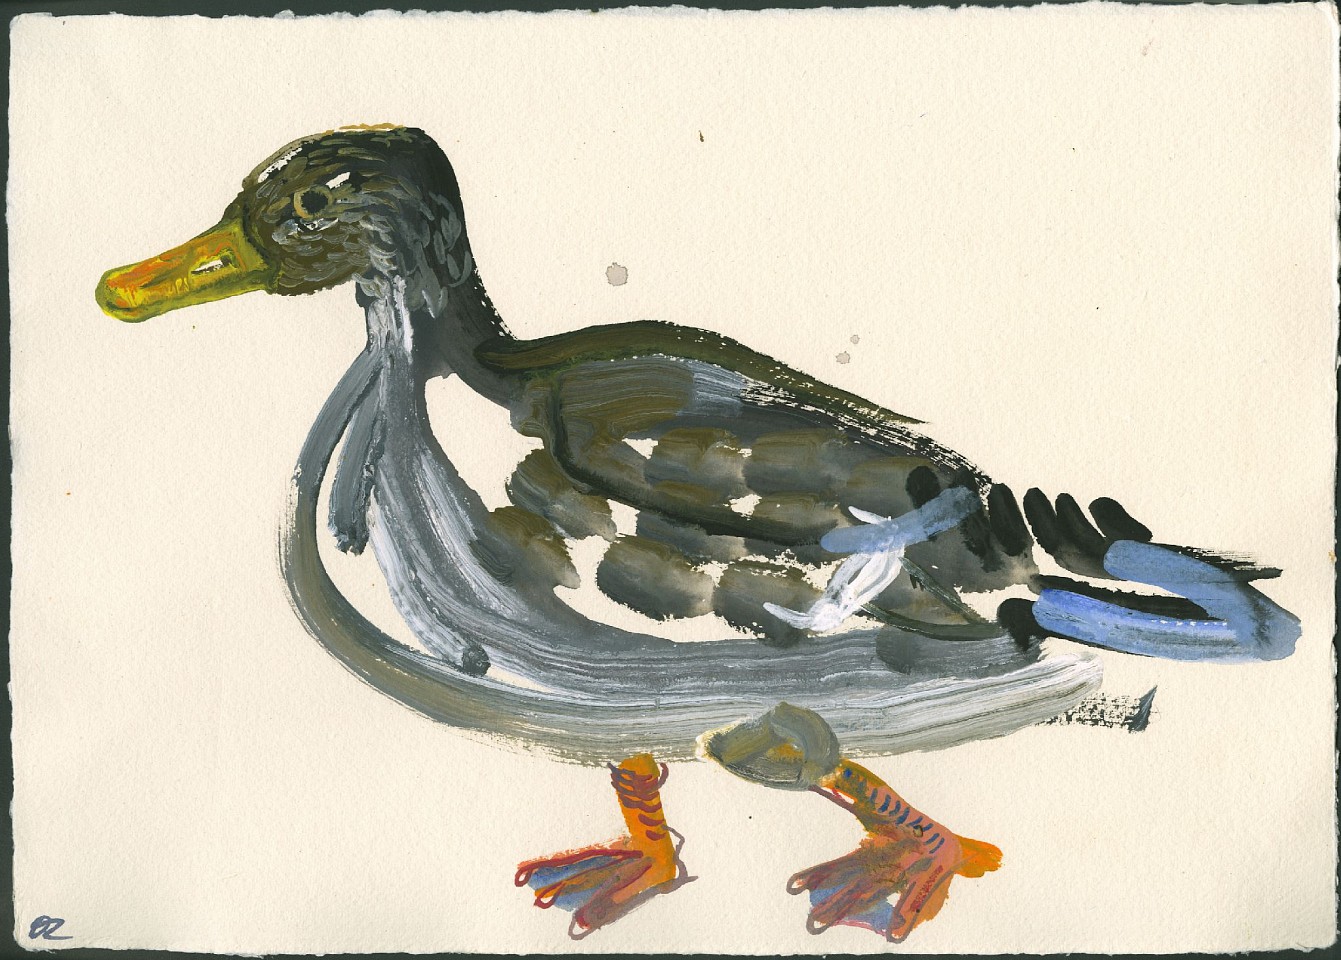 Olena Zvyagintseva, Duck-10, 2022
Gouache on handmade paper, 12""x 17""
OZ 683
Price Upon Request